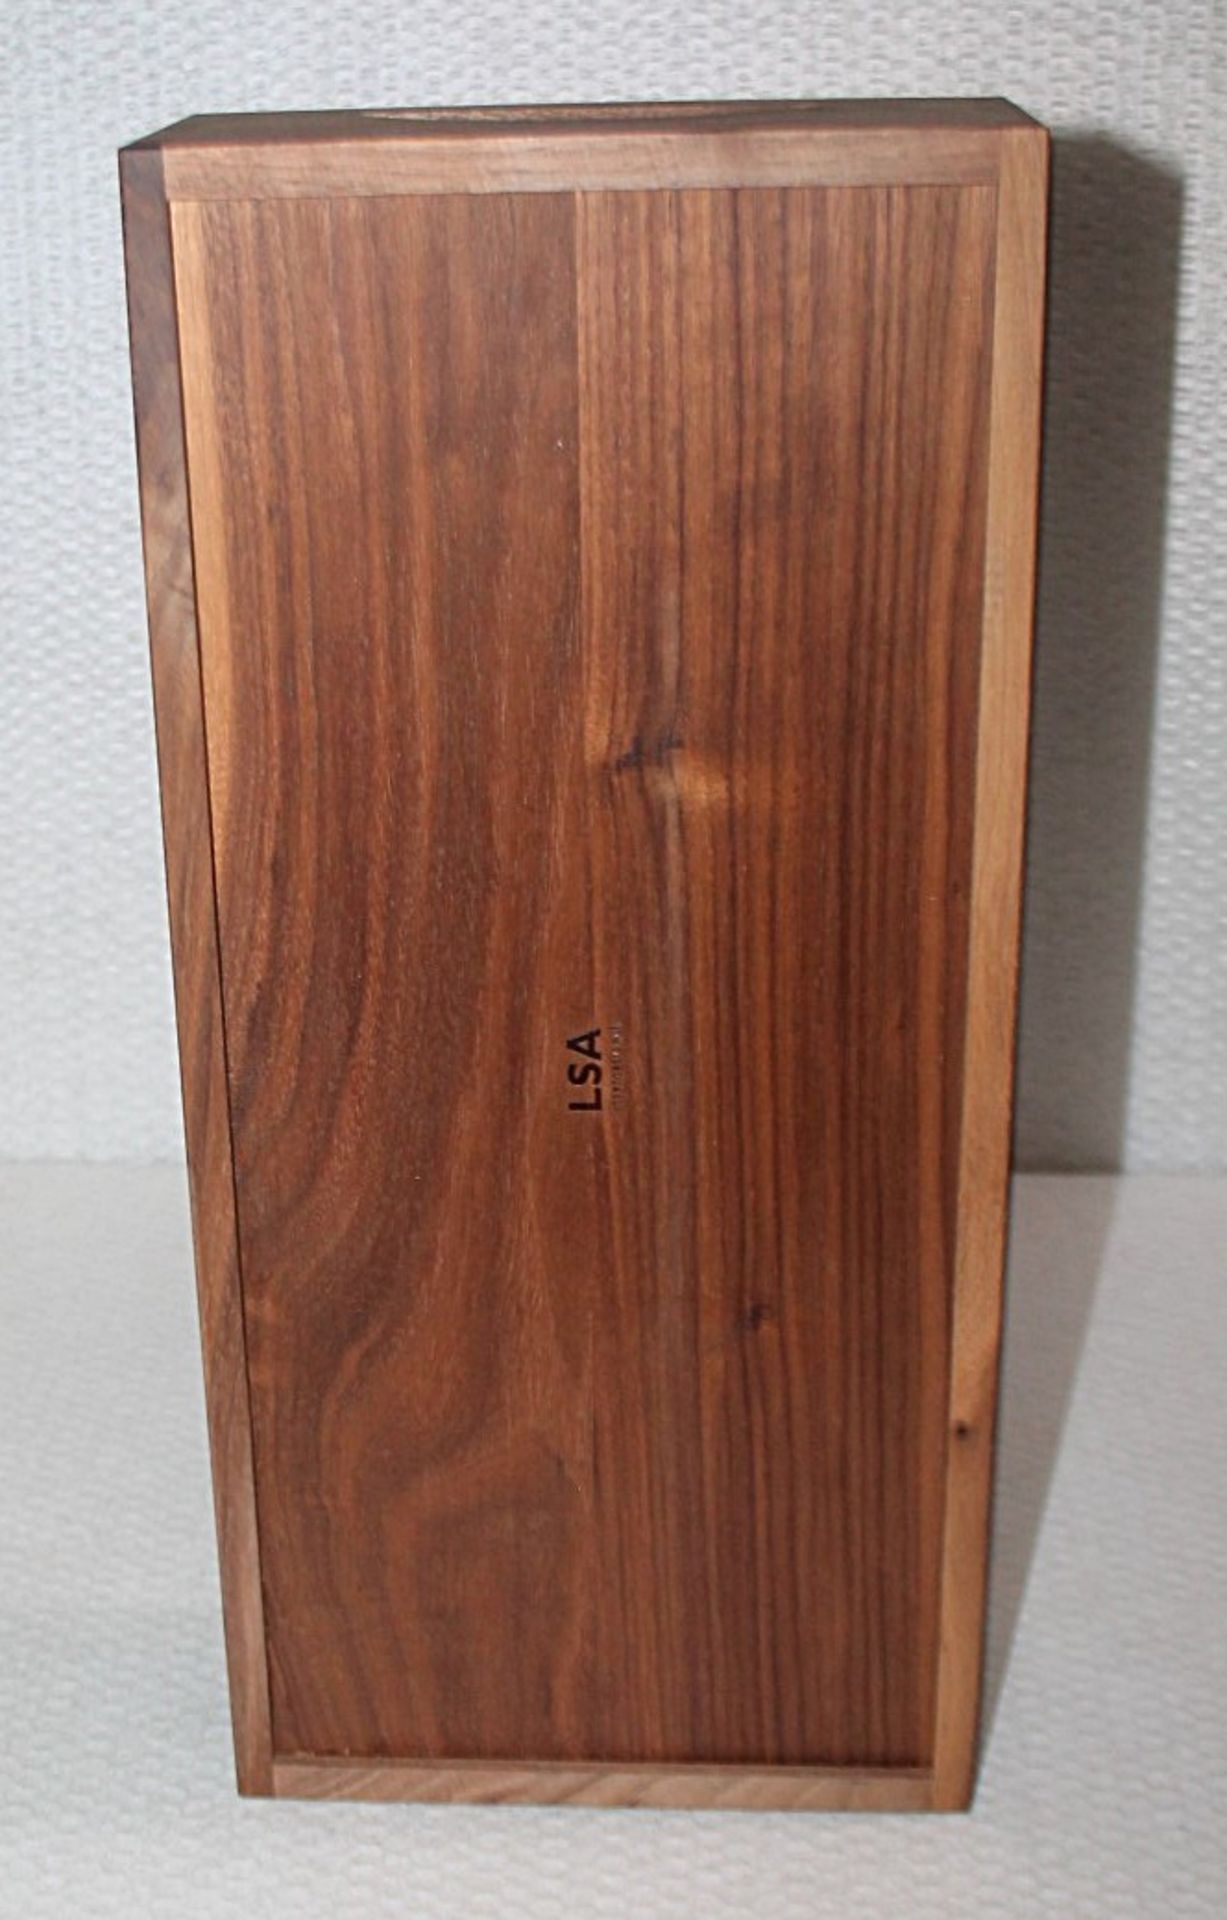 1 x LSA INTERNATIONAL 'Islay' Whisky Connoisseur Set - Original Price £325.00 - Unused Boxed Stock - Image 16 of 16